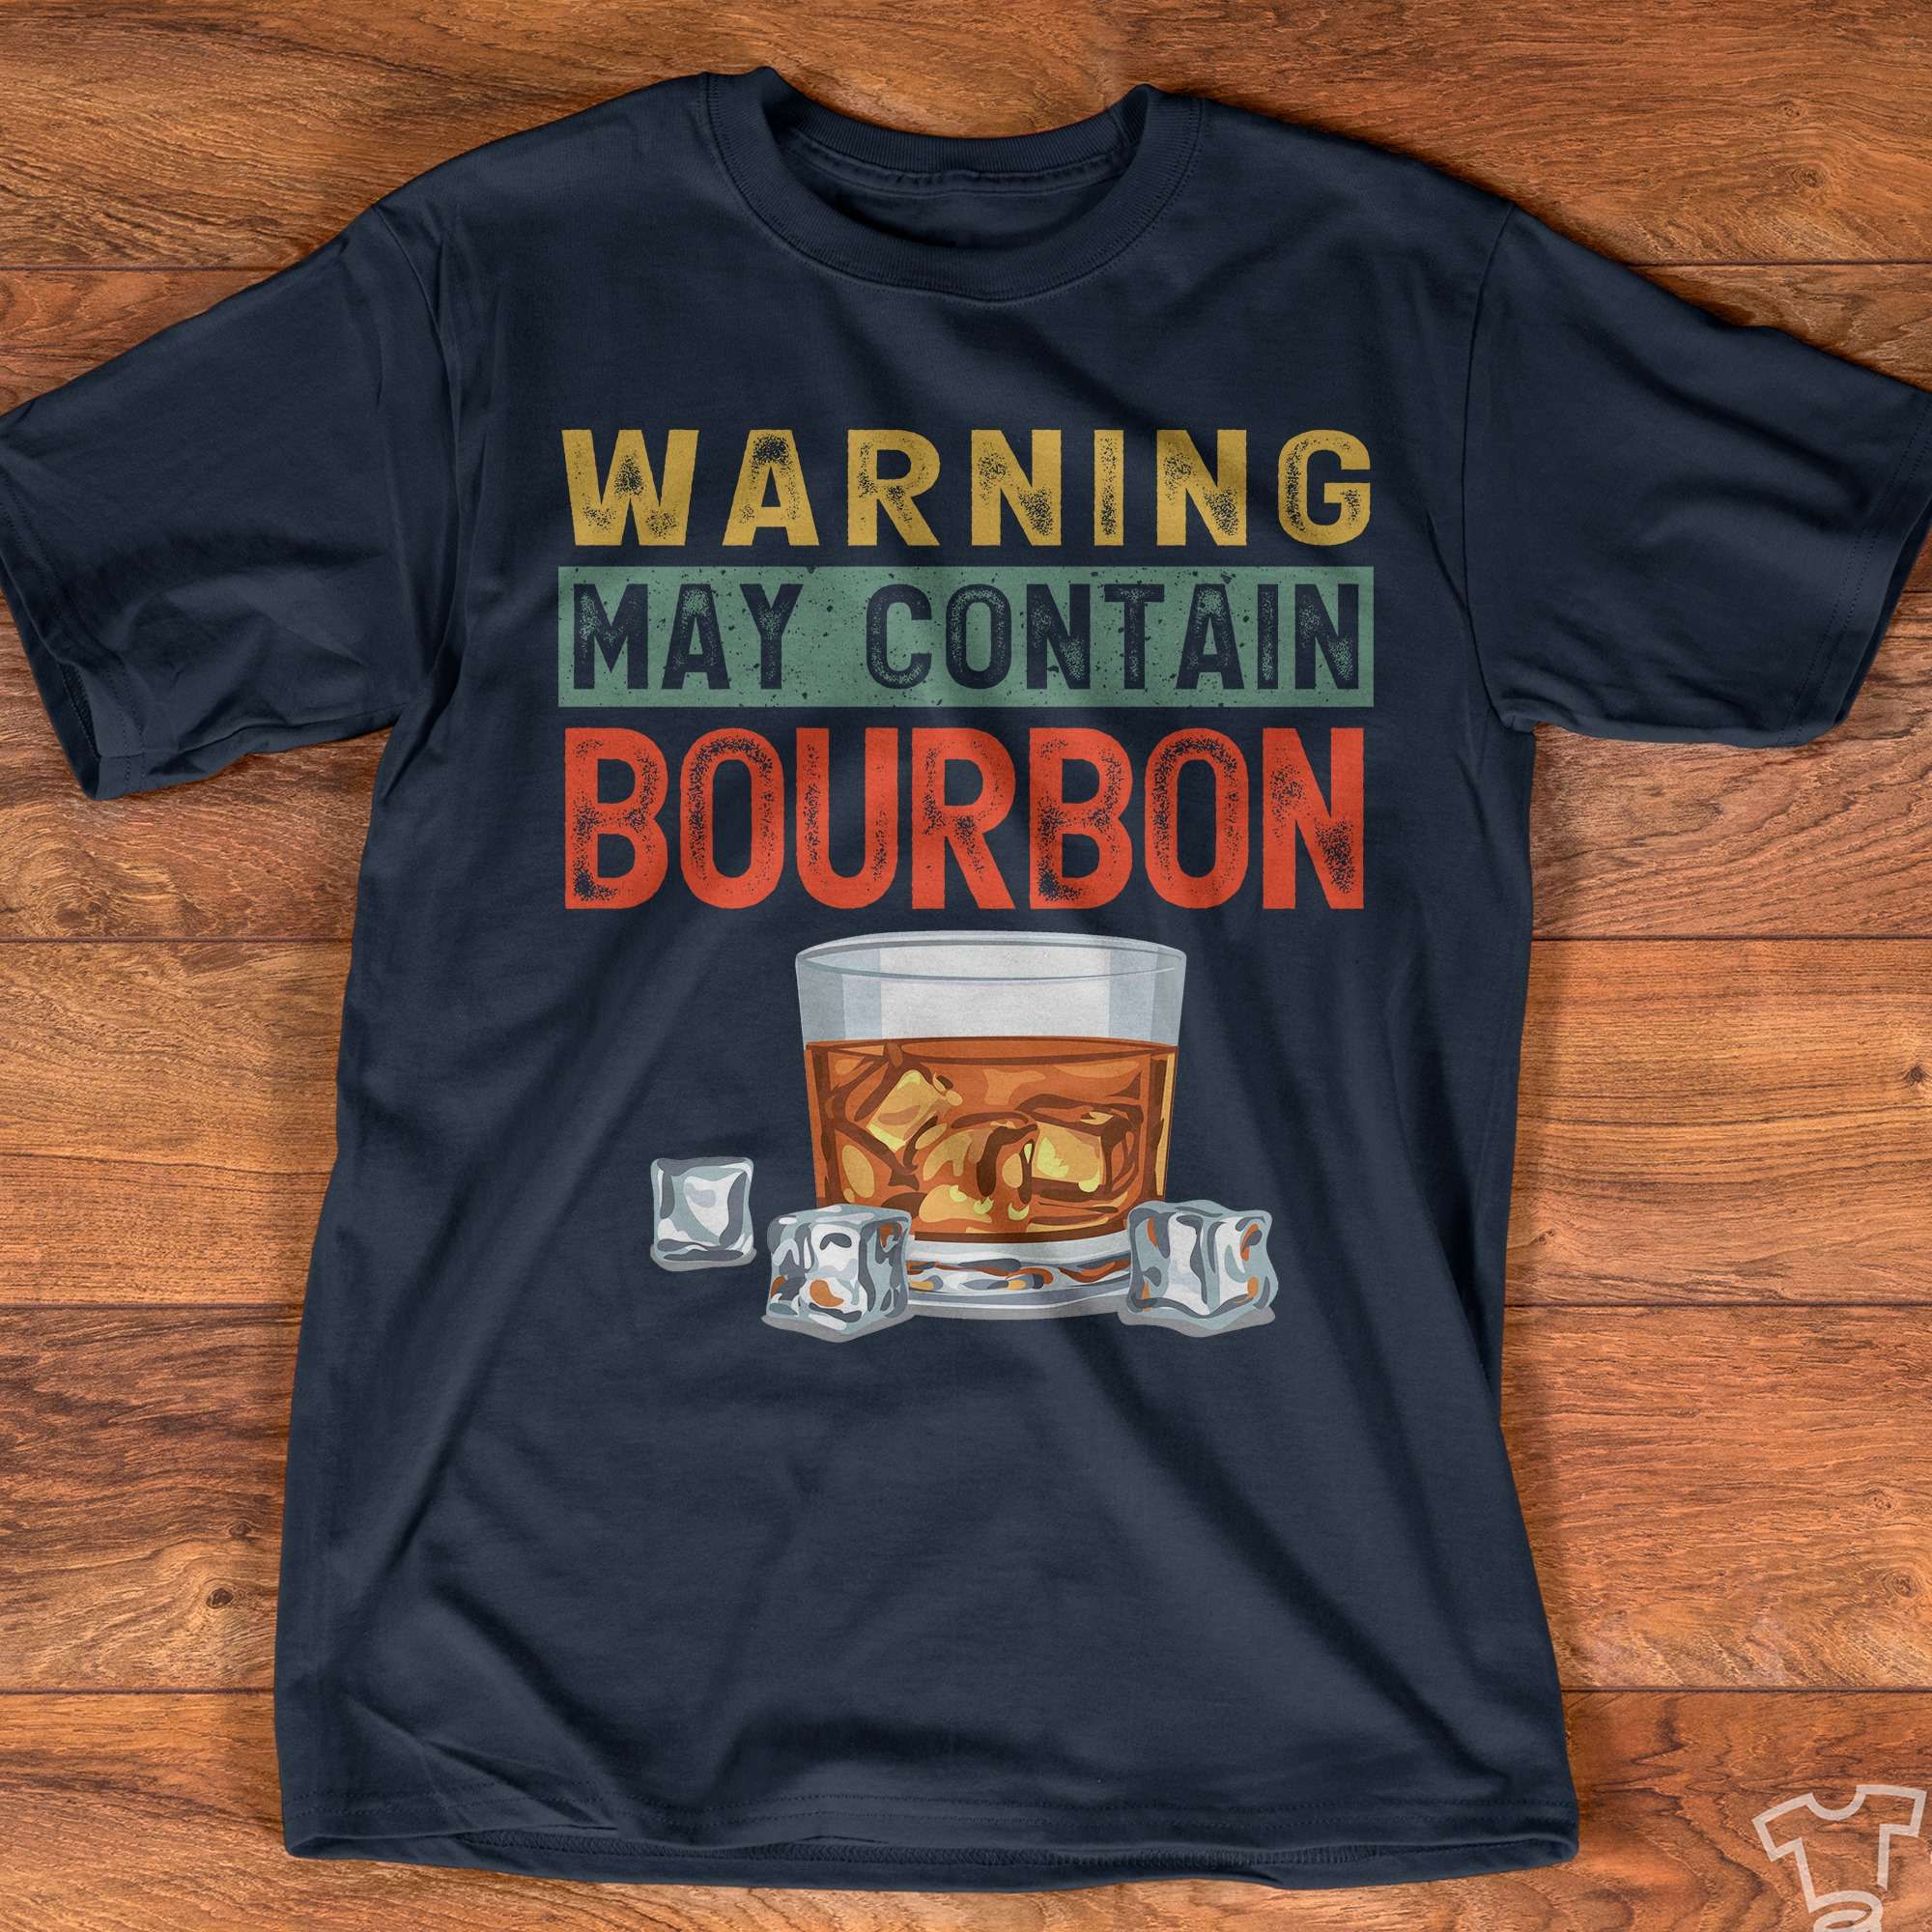 Warning may contain Bourbon - Bourbon wine, glass of wine